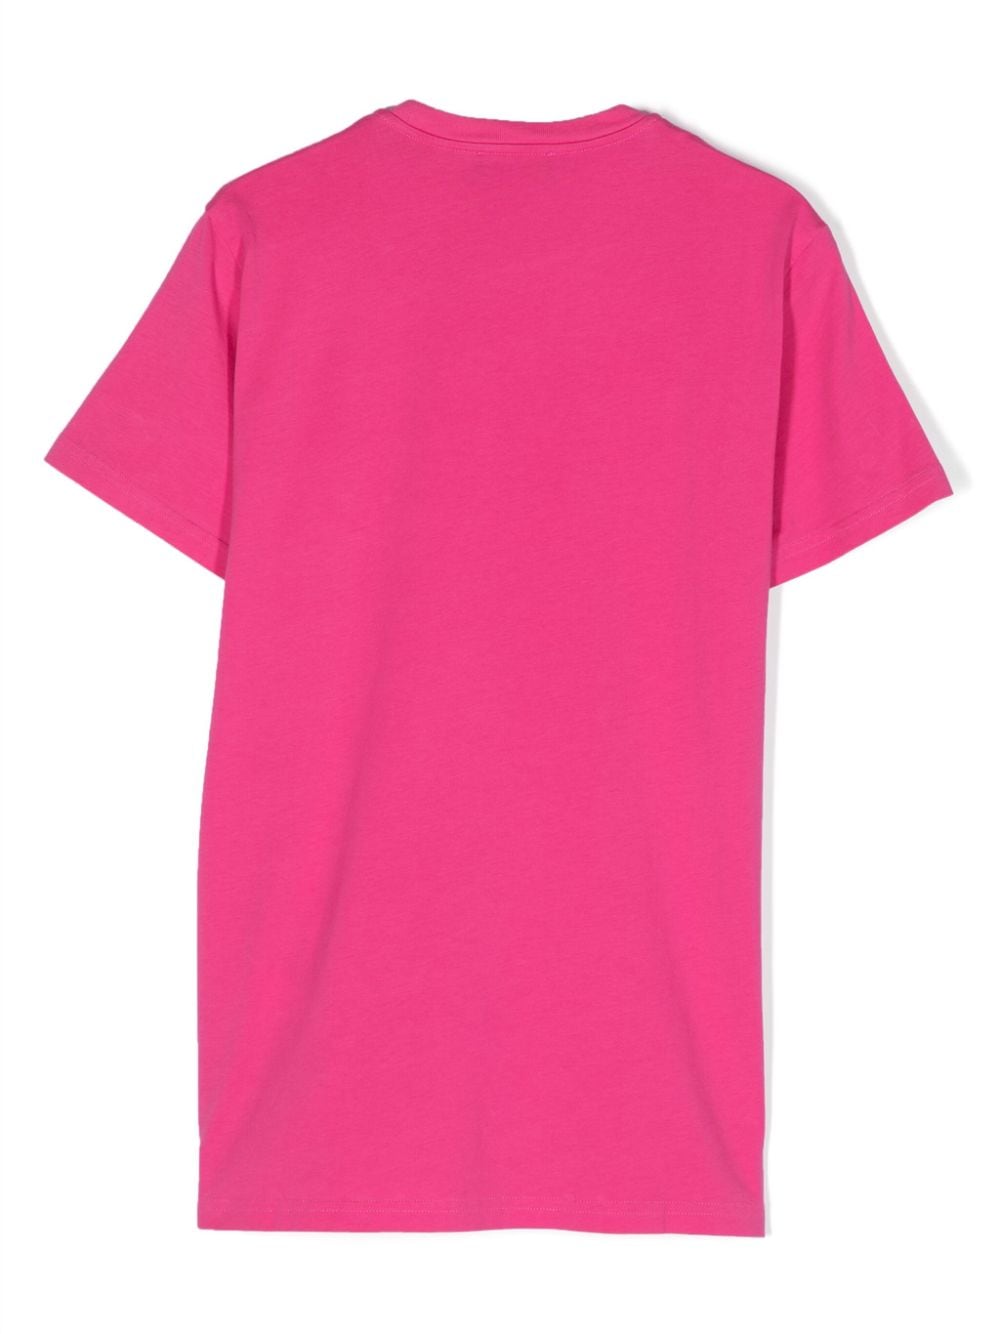 Fuchsia t-shirt for boys with ICON print